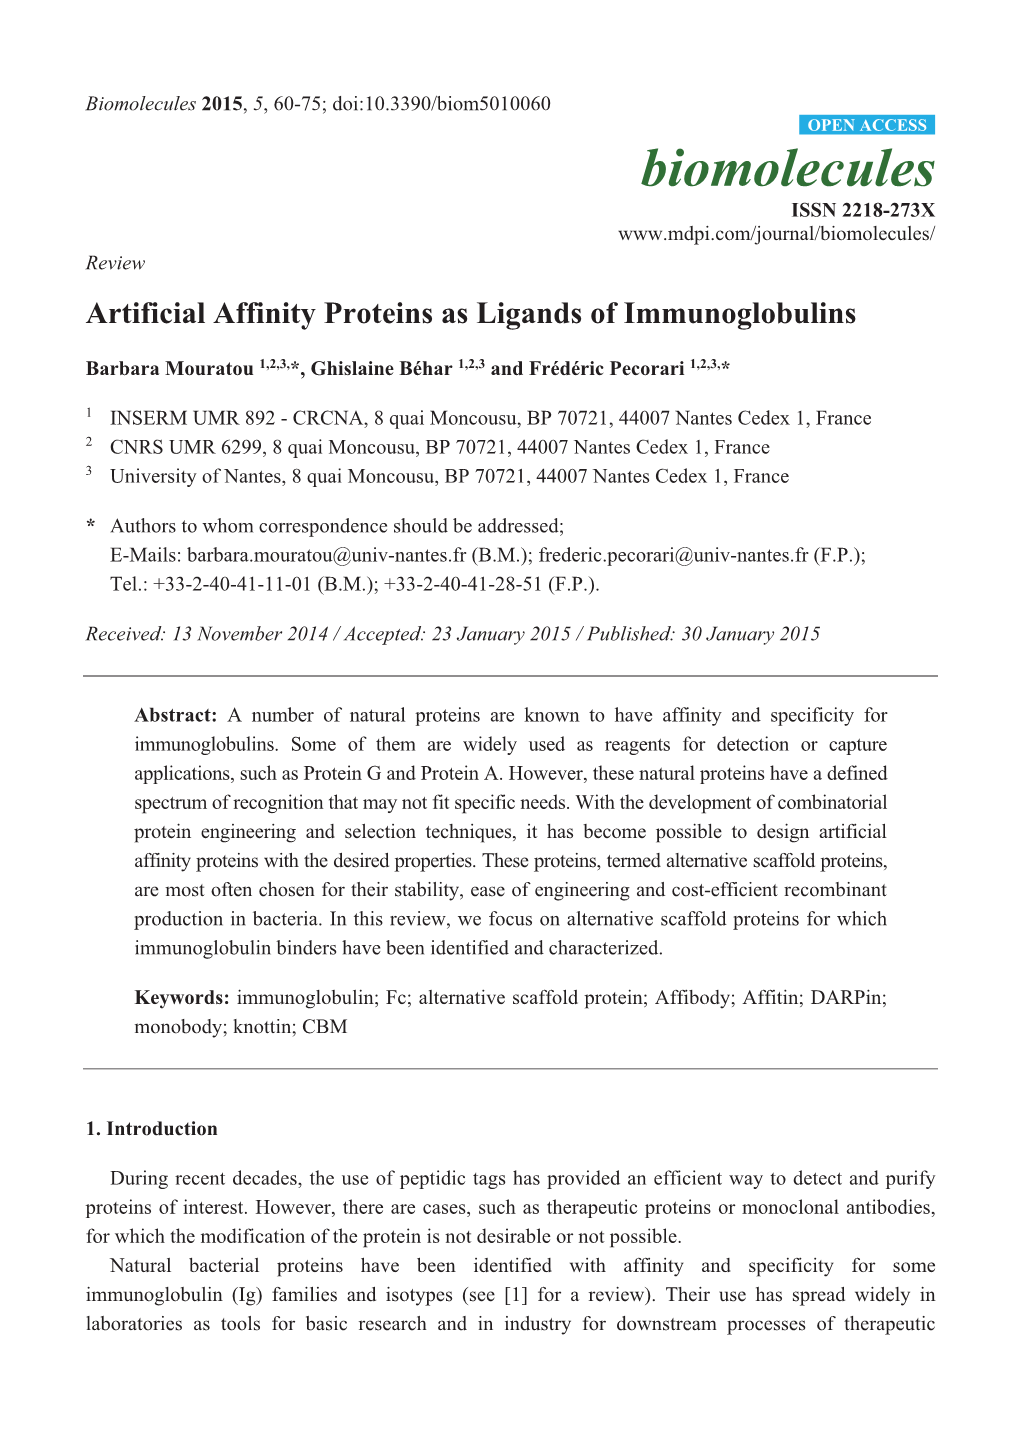 Artificial Affinity Proteins As Ligands of Immunoglobulins